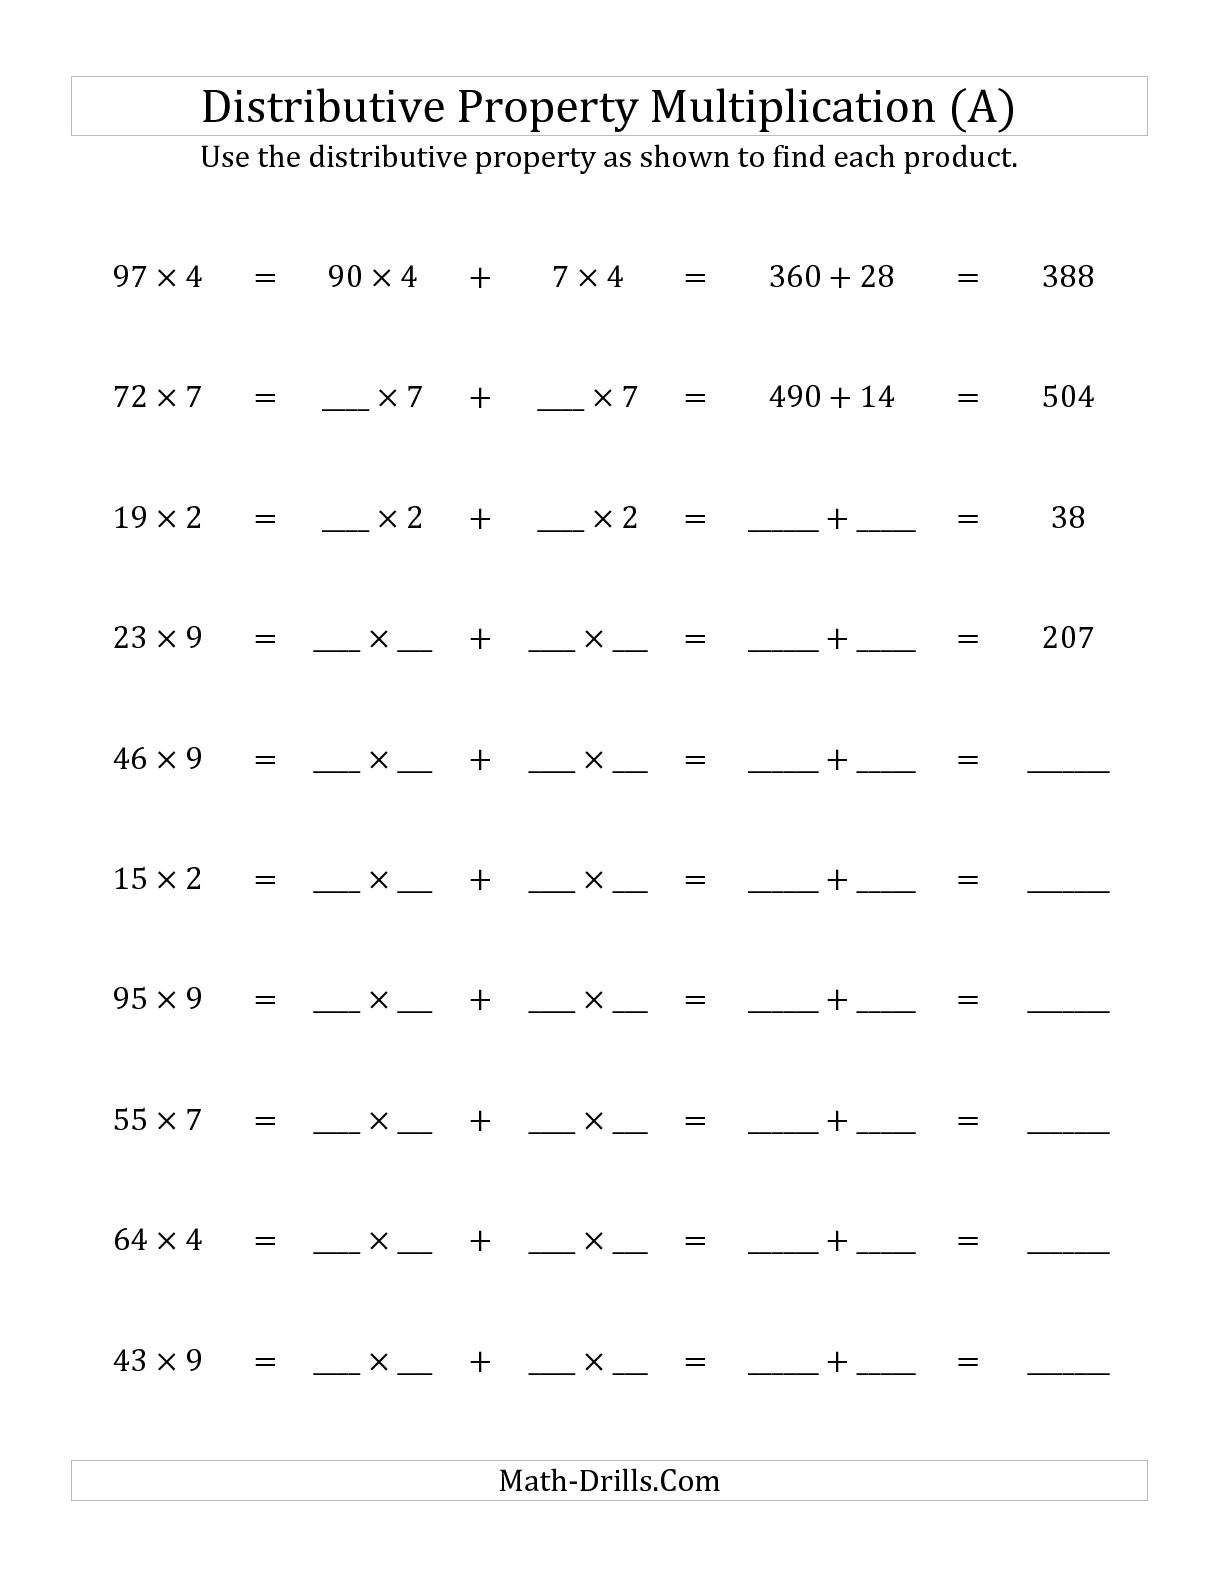 Distributive Property Of Multiplication Over Subtraction Worksheets